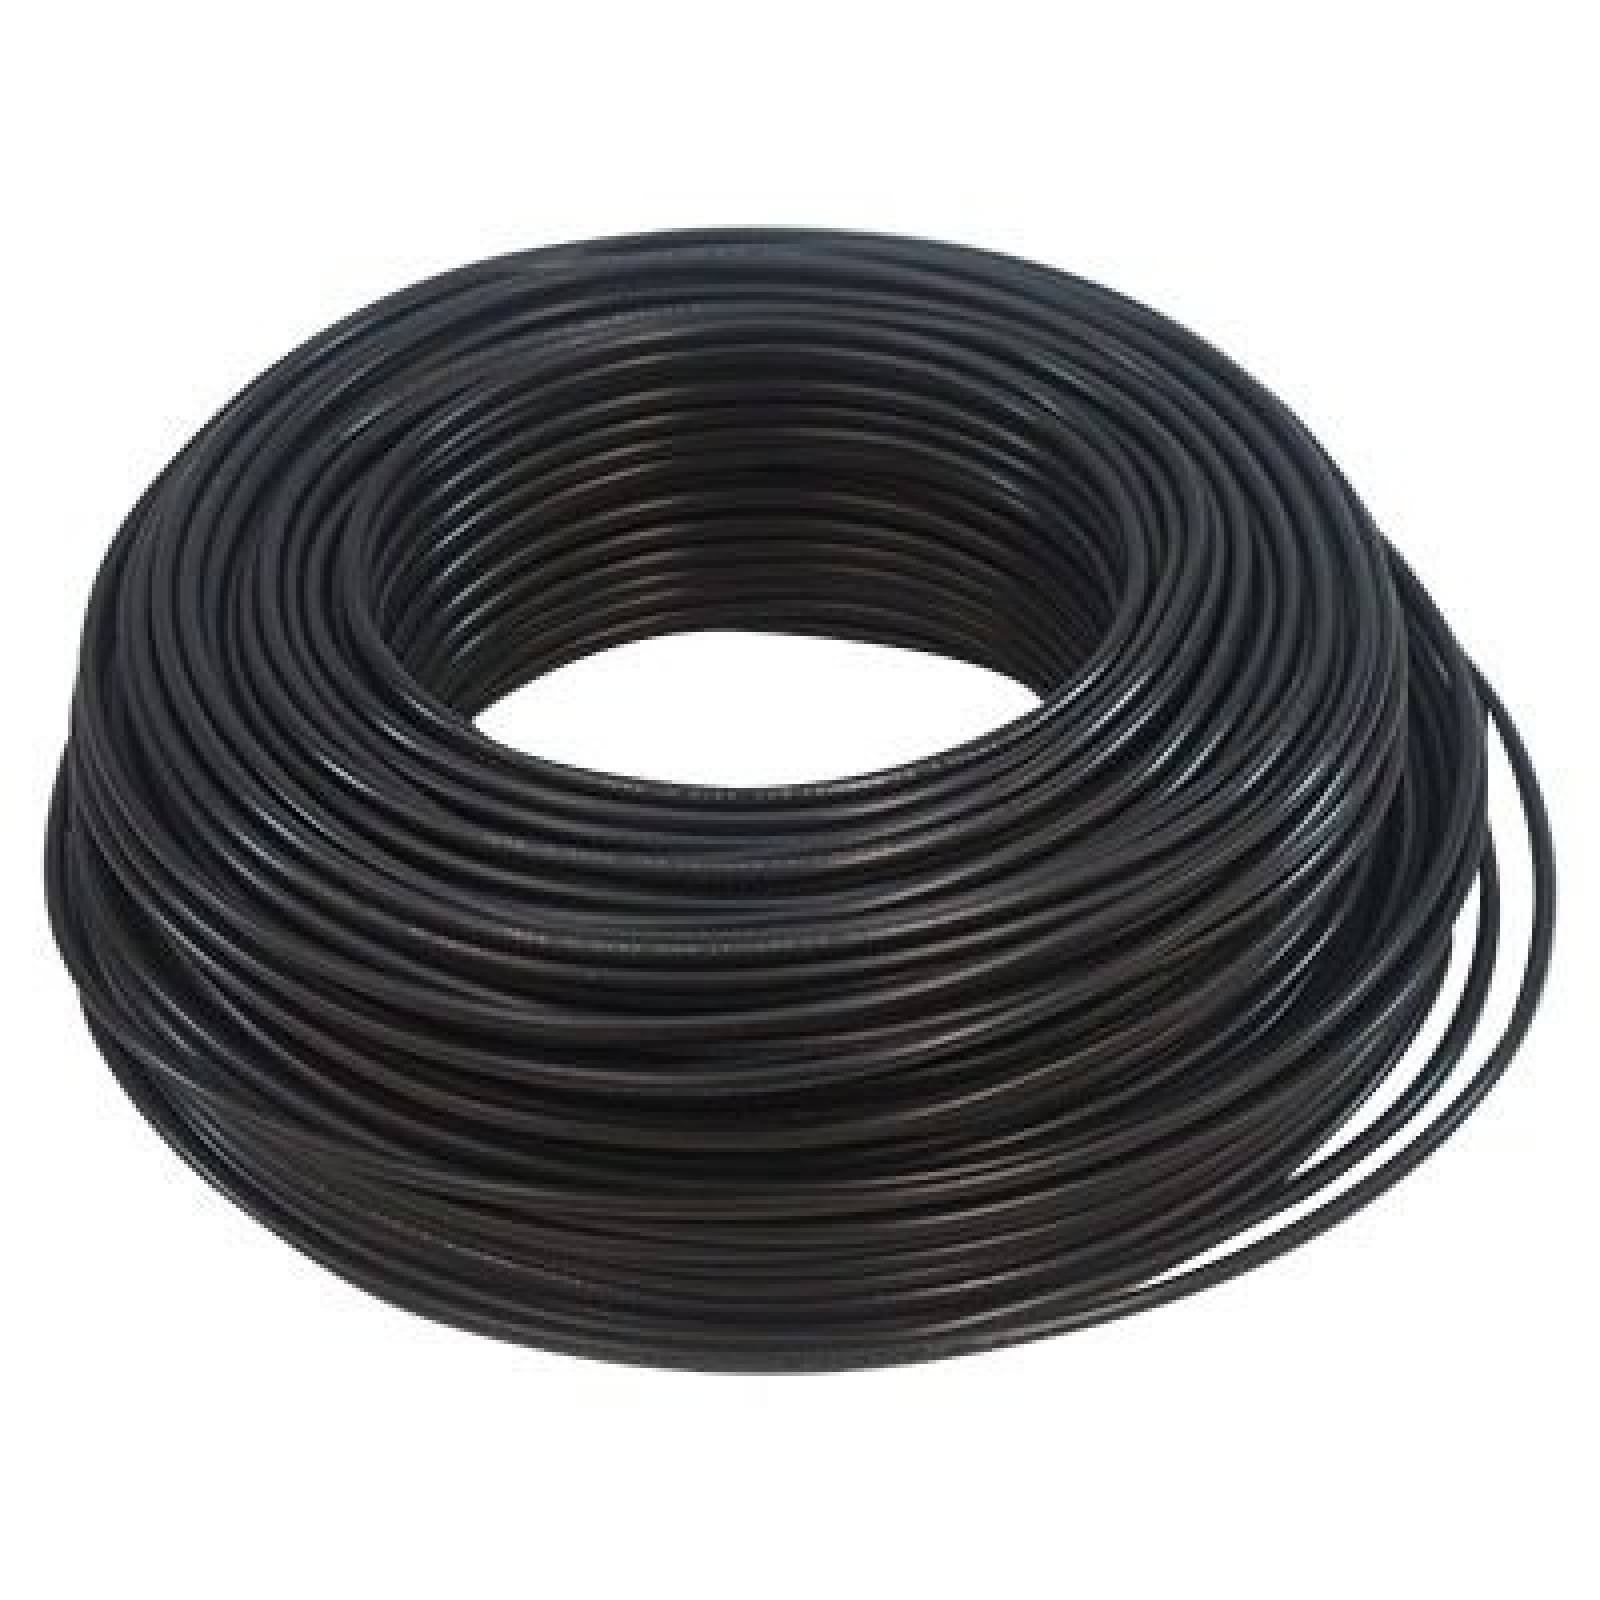 Cable Electrico Iusa Negro Thwc 14 136